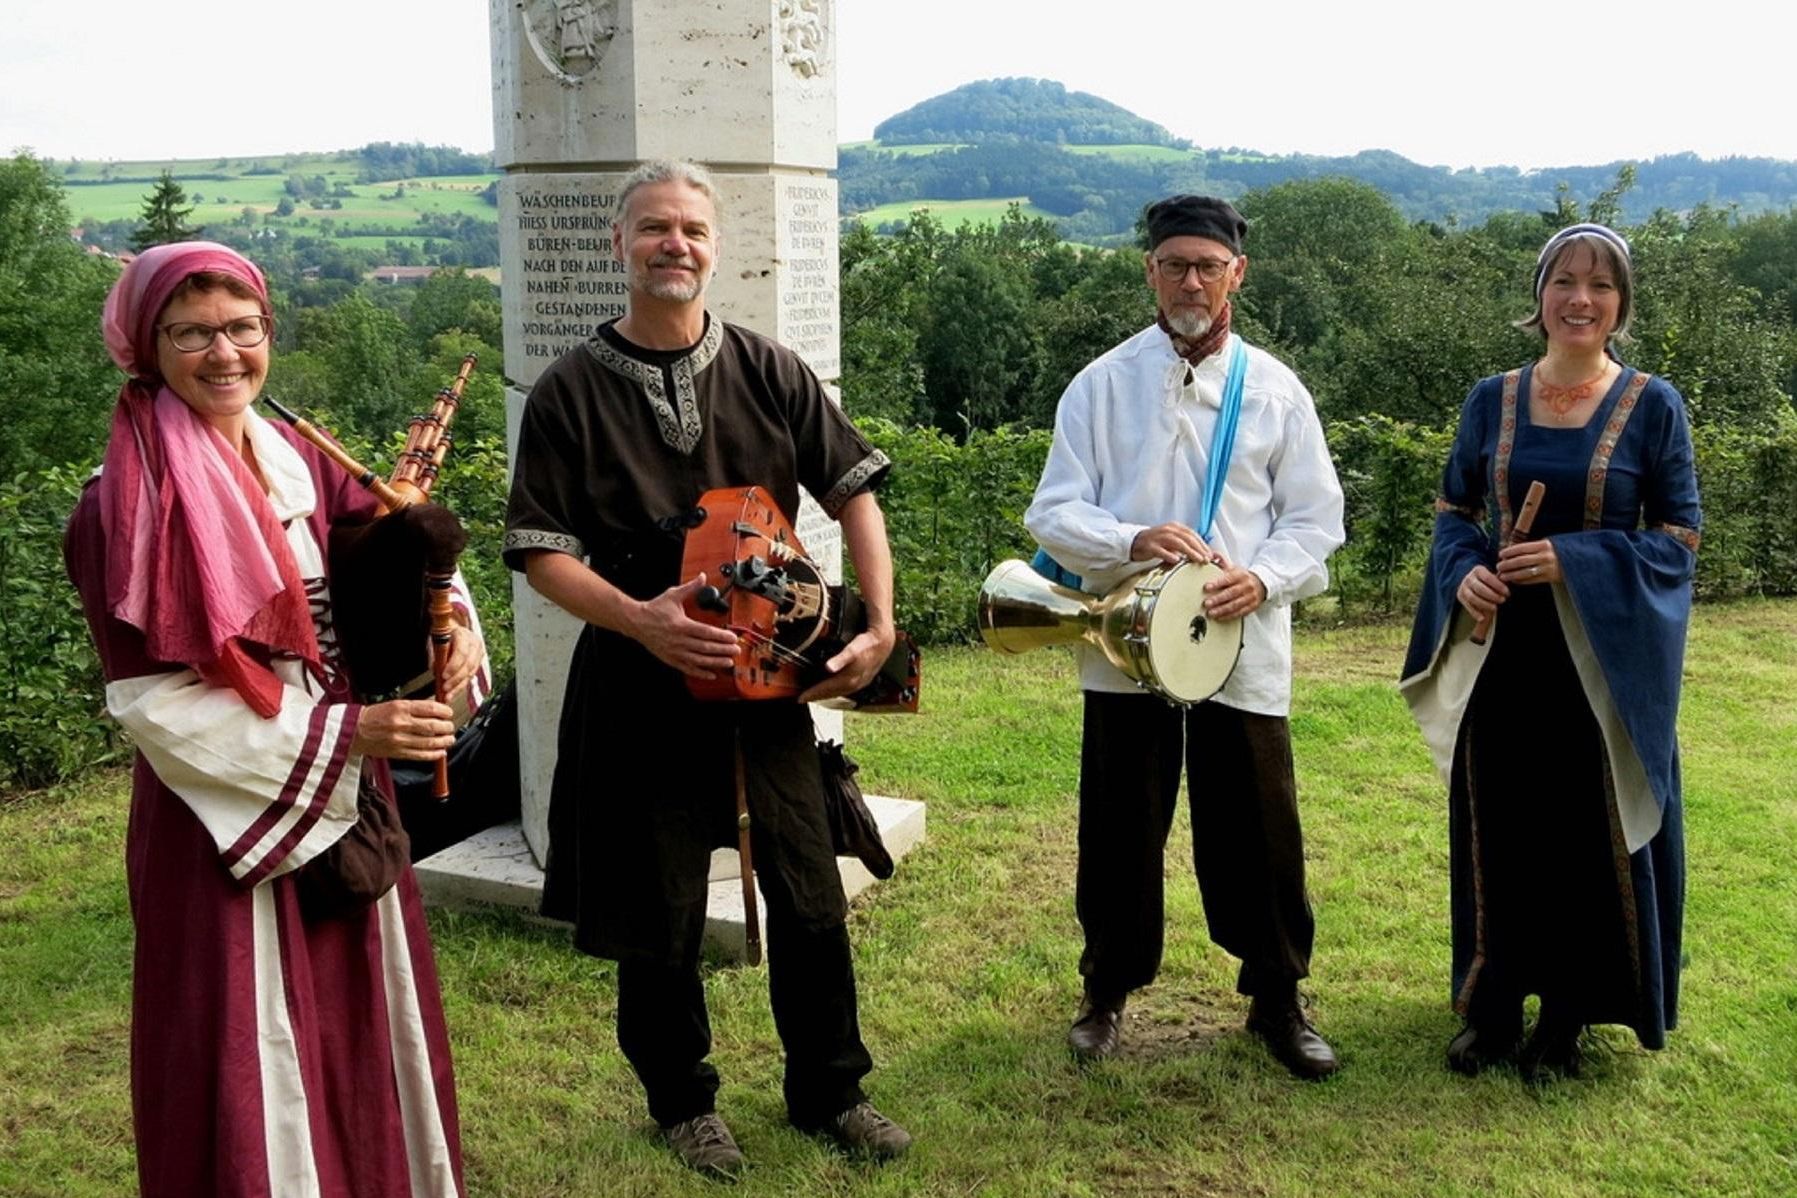 Mittelalter-Band Lavandera